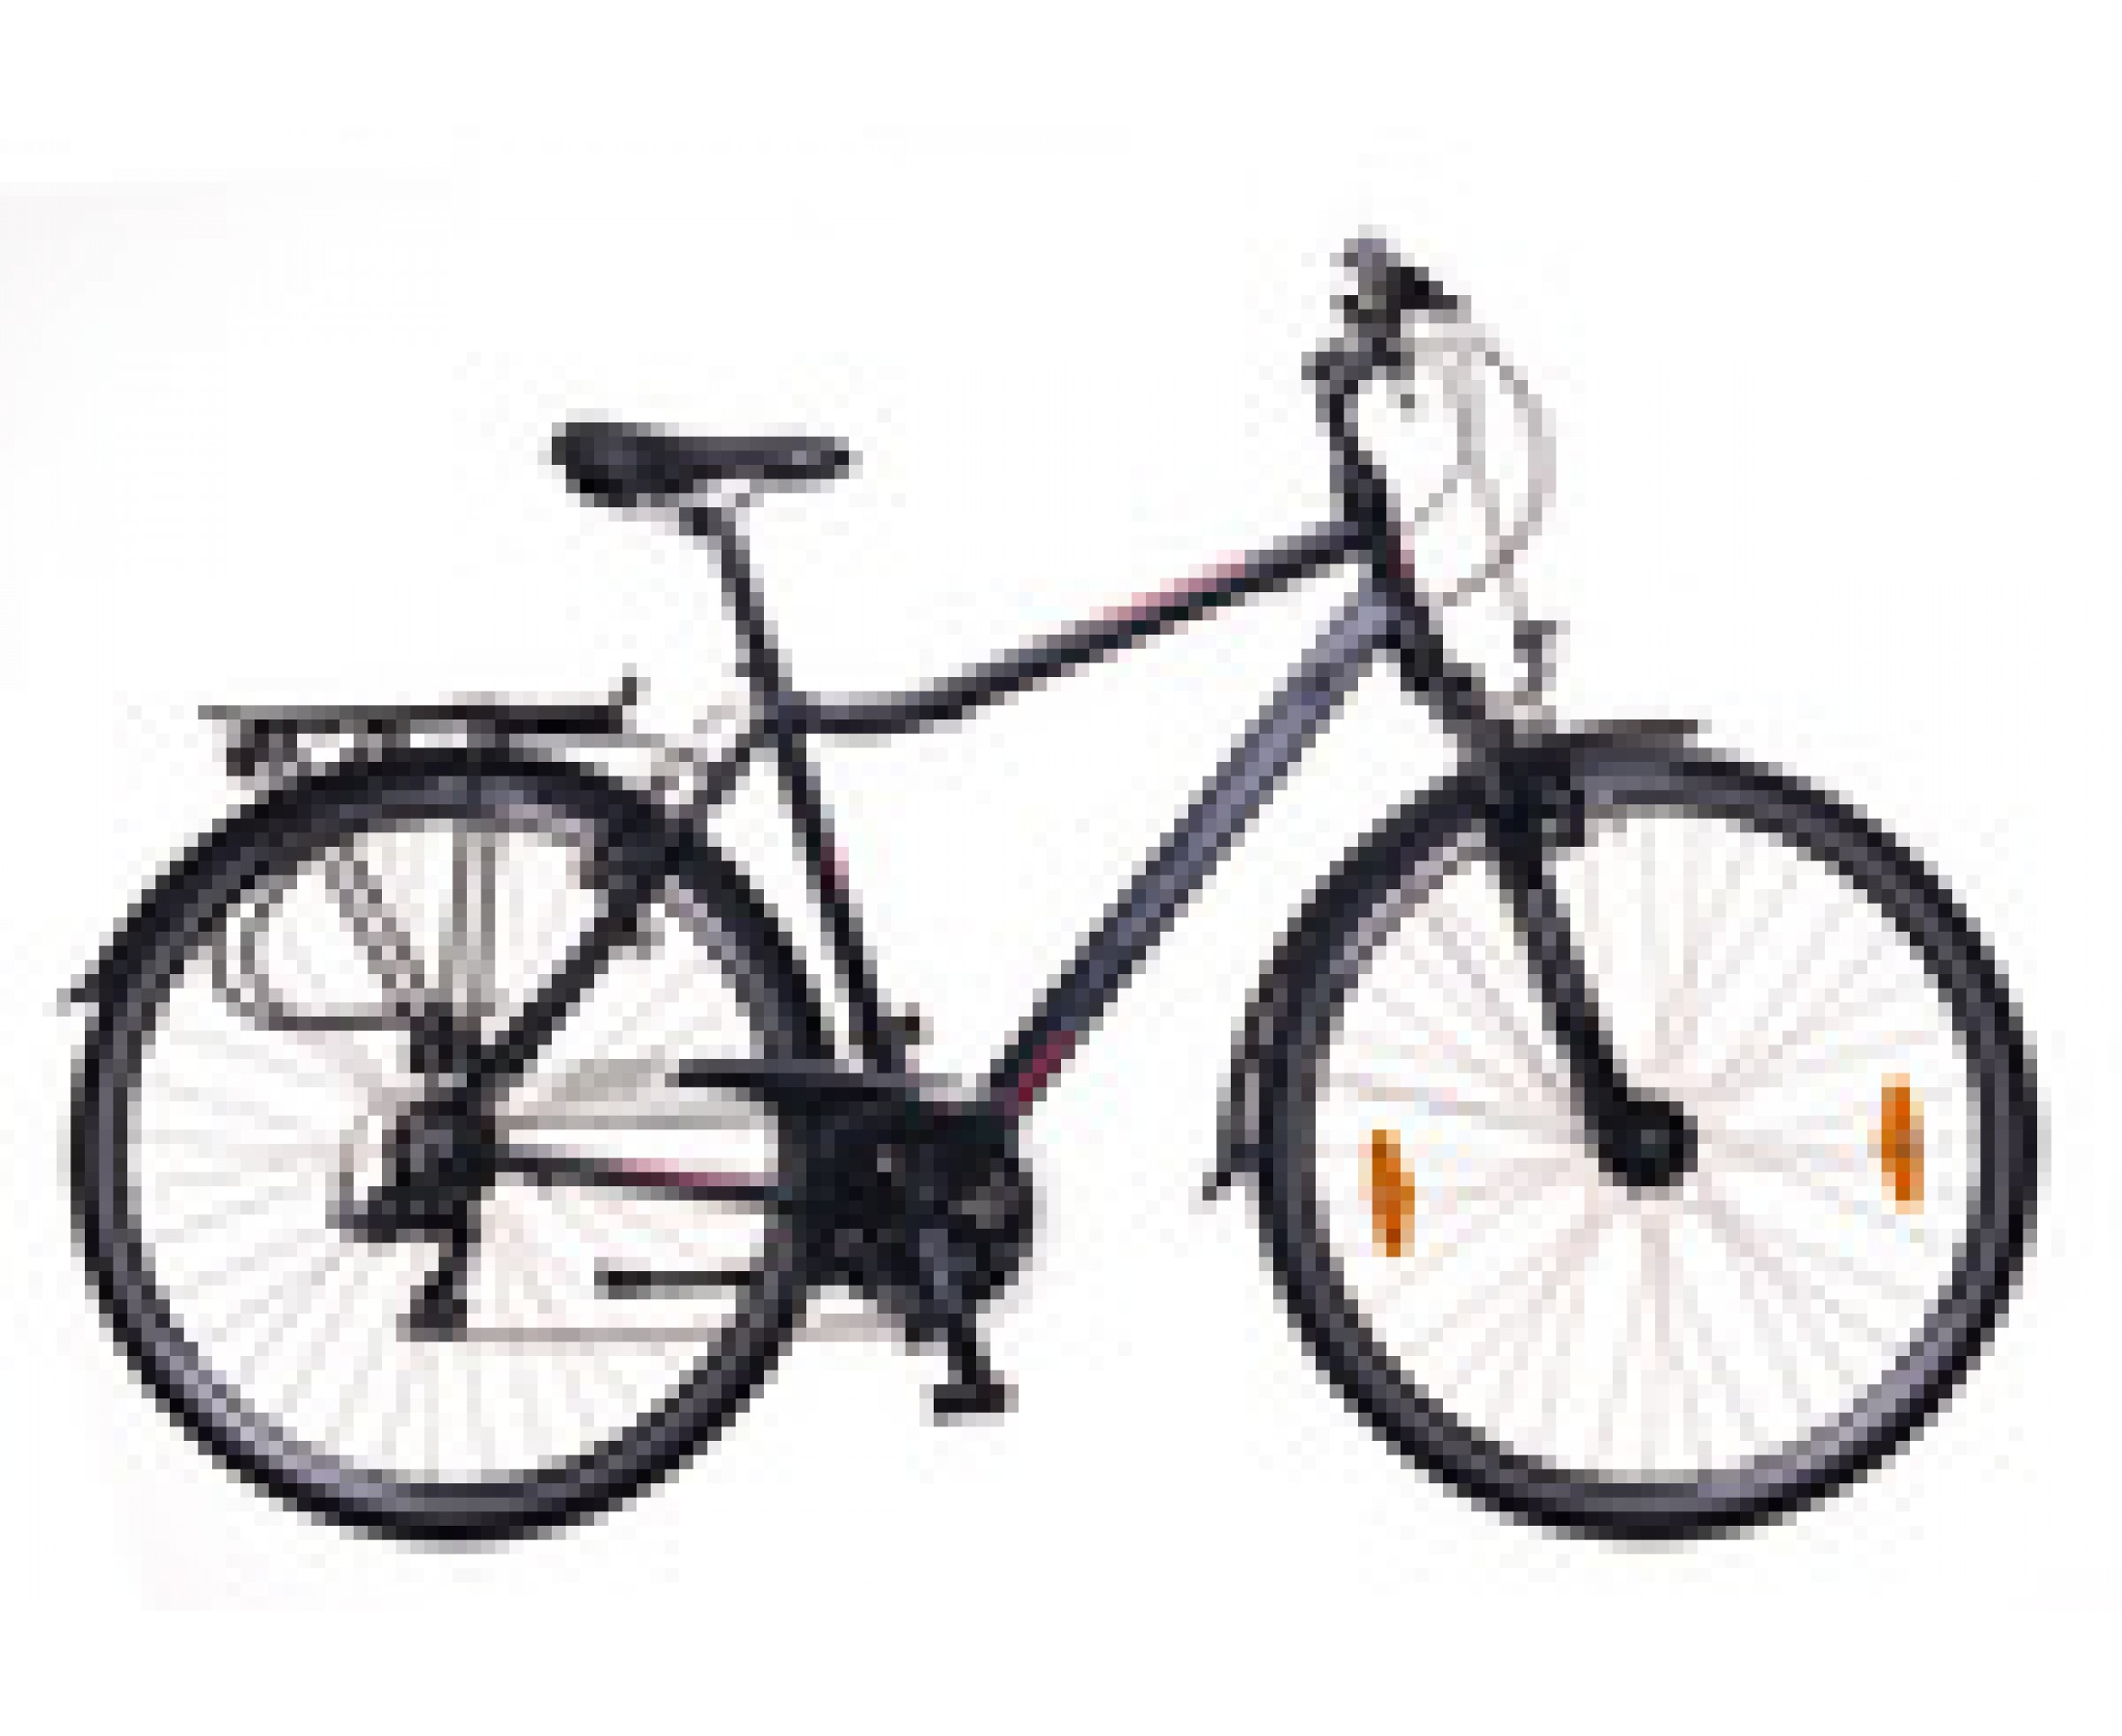 28"trekkingový bicykel Ravenna 200 - pánsky  24 SPD